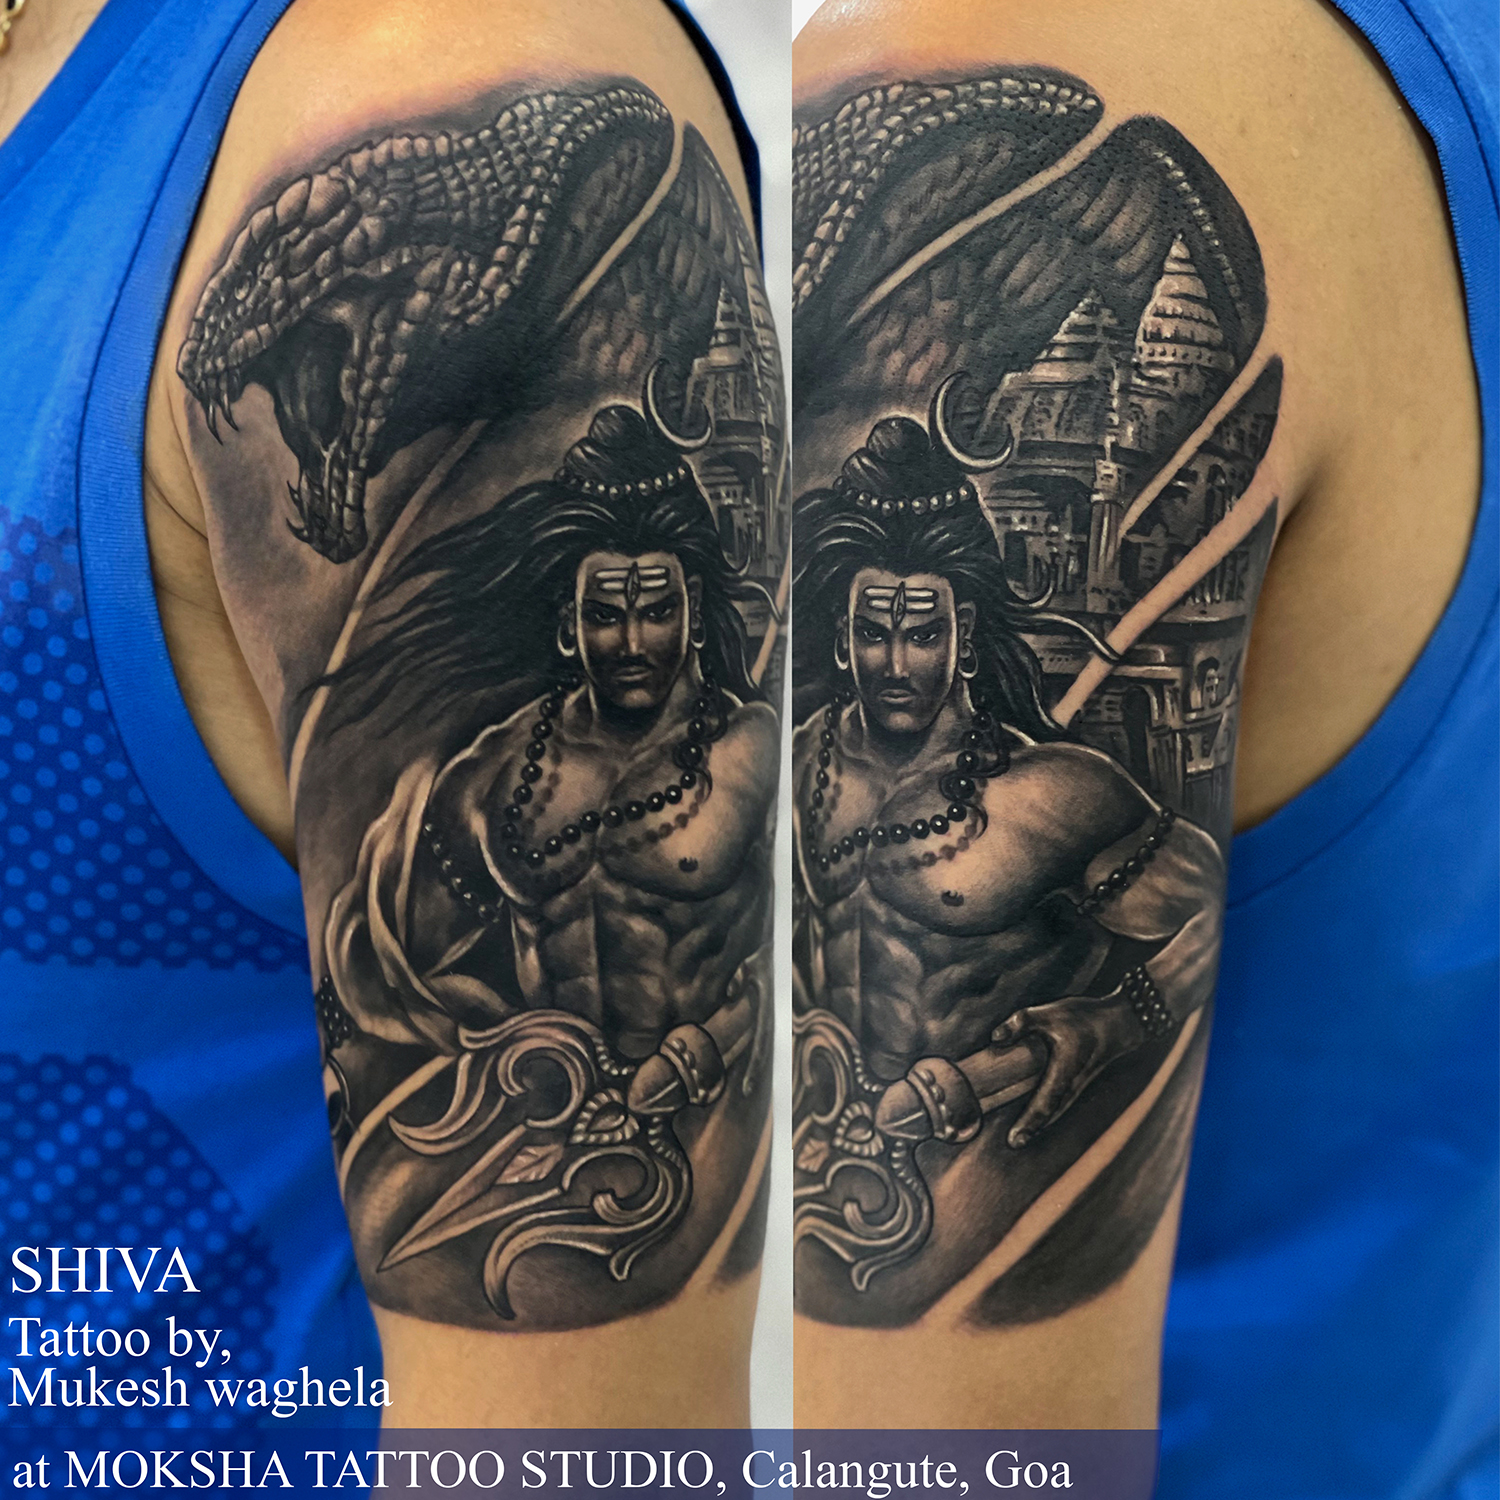 Premium Vector | Happy maha shivratri greeting with adiyogi lord shiva  illustration tattoo style